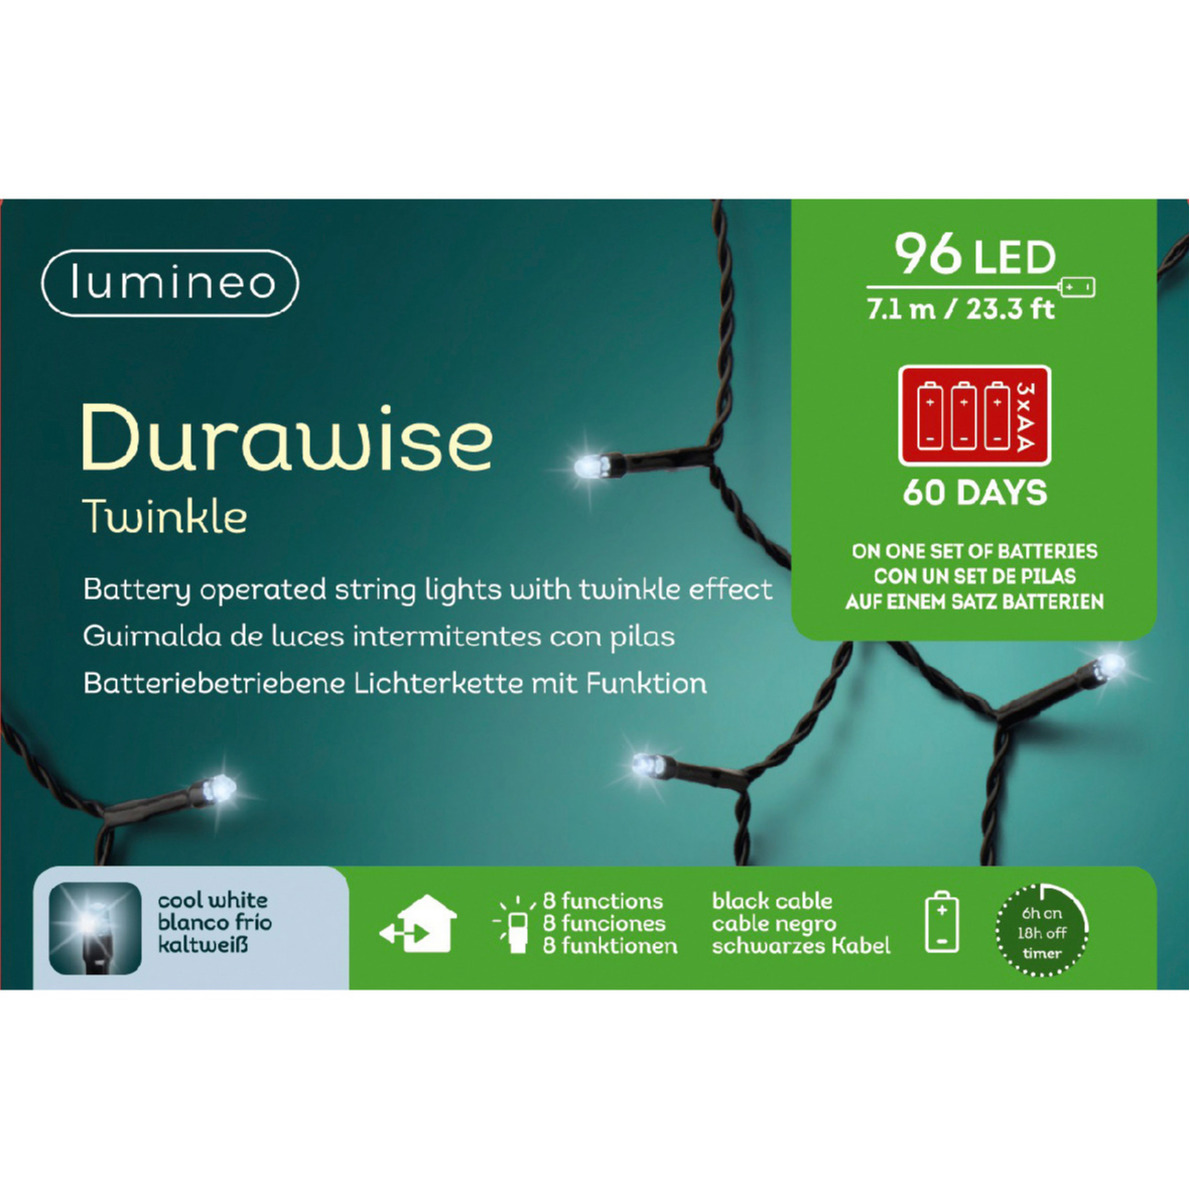 2x stuks lED Durawise twinkle buitenverlichting op batterij helder wit 96 lampjes